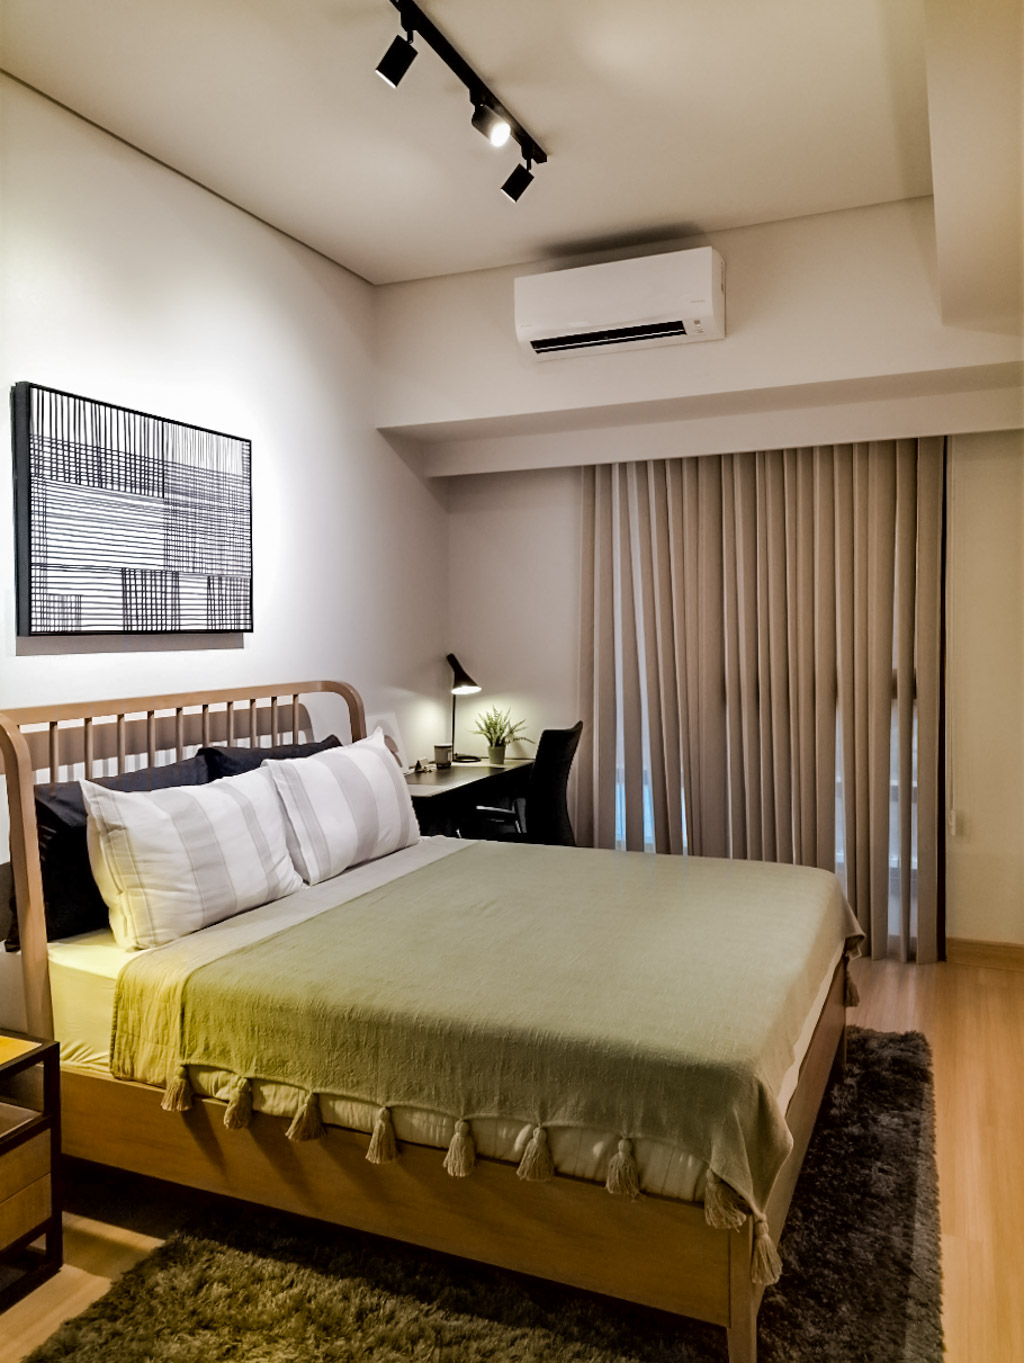 SRD60A1 1 Bedroom Condo for Sale in Cebu Business Park - 3